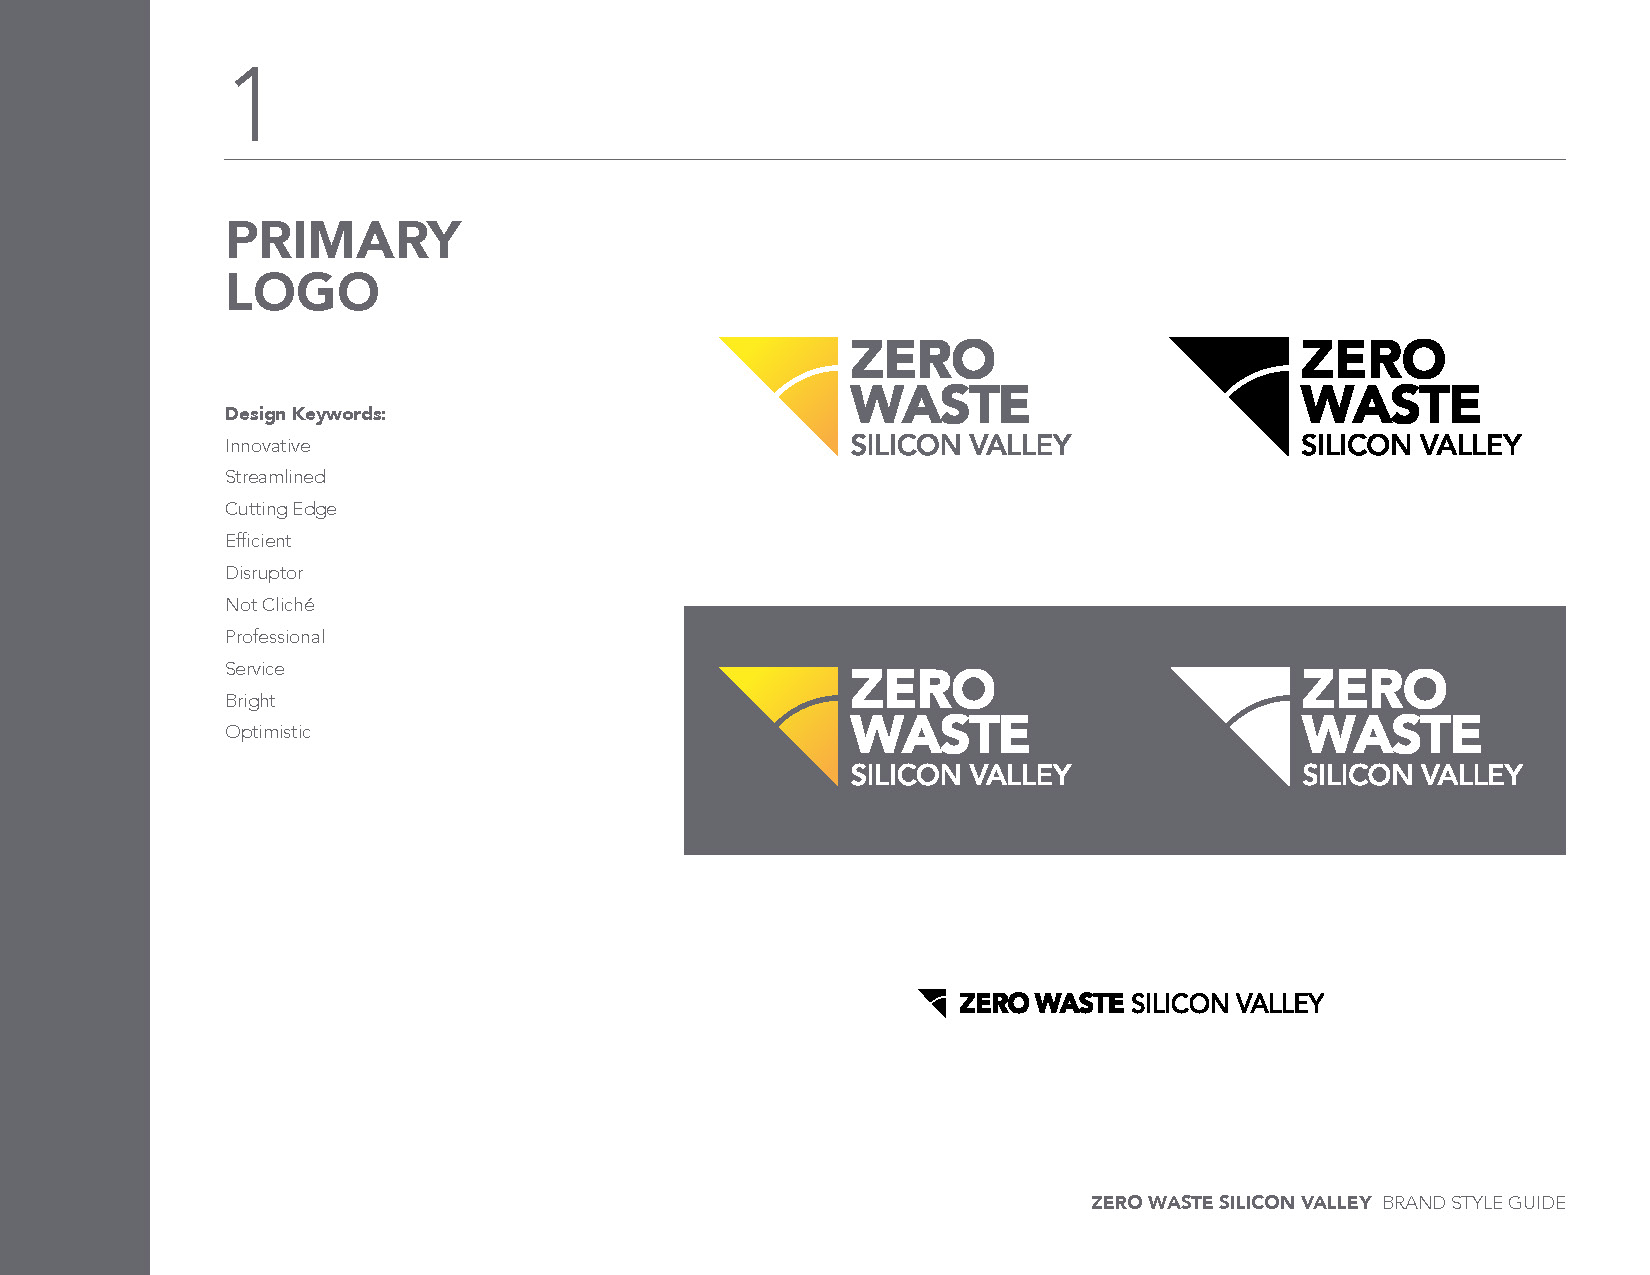 Zero Waste Silicon Valley style guide